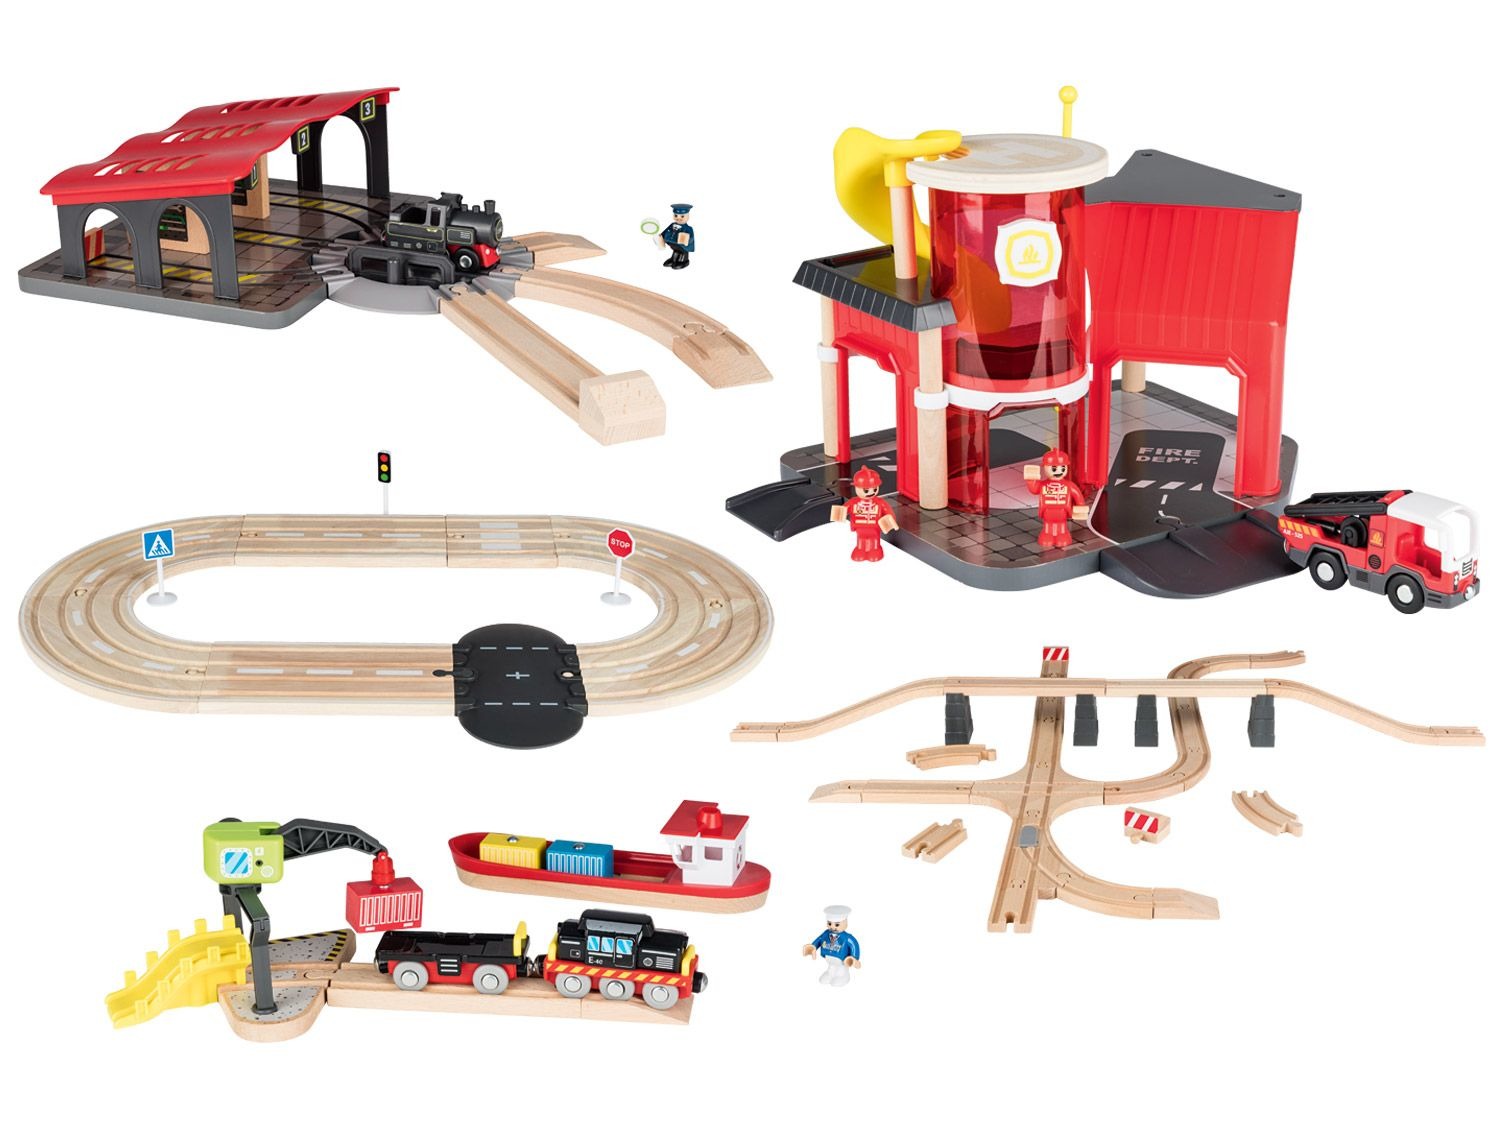 Playtive Train Set - 16 Pieces